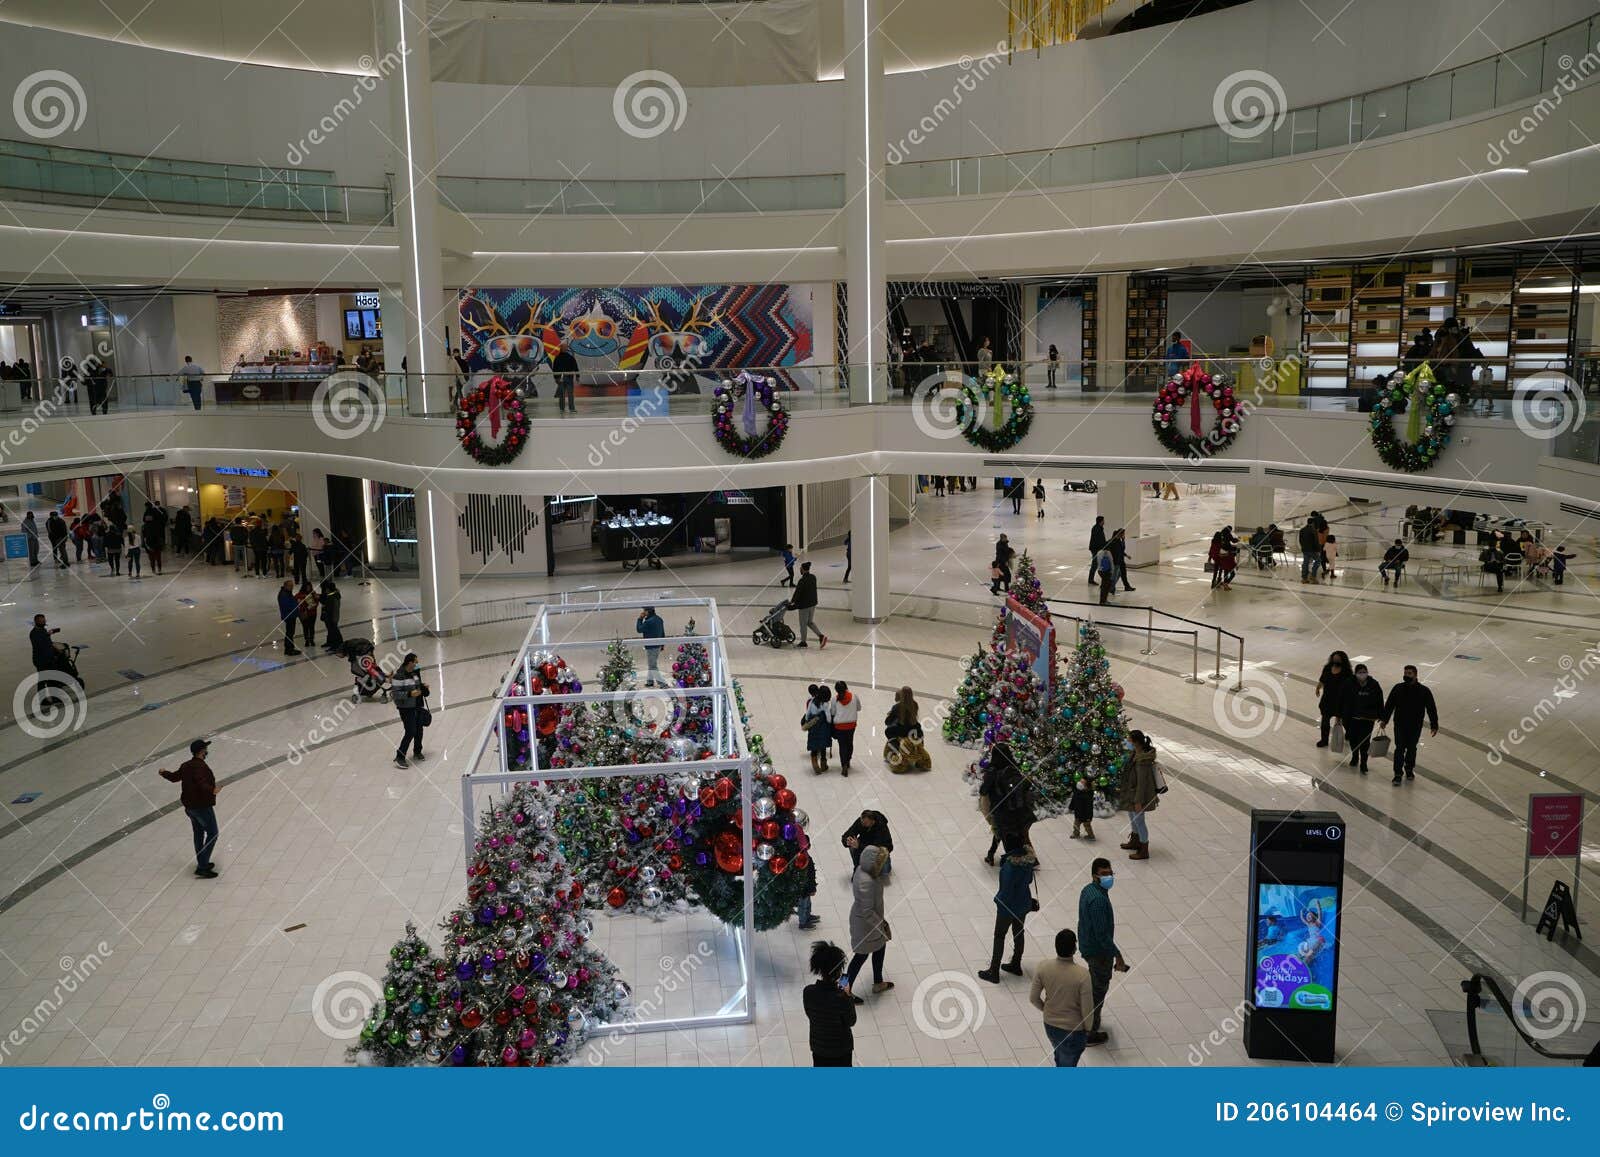 American Dream Mall Meadowlands Nj Usa December New Mega Shopping Amusement Area York Suburbs 206104464 